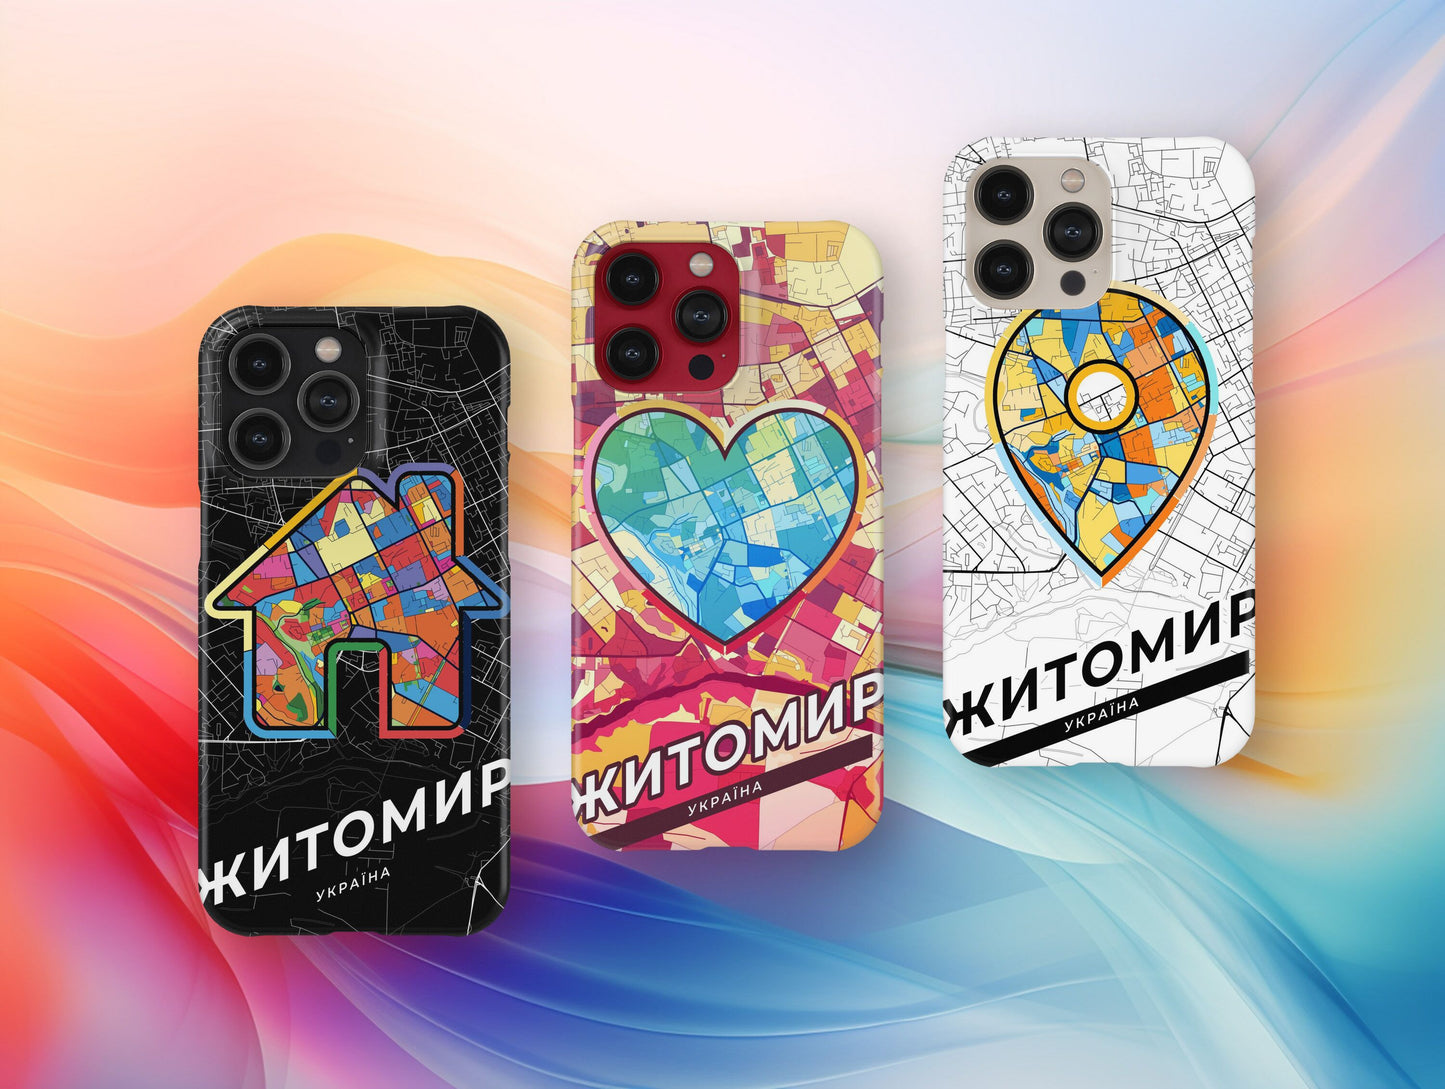 Zhytomyr Ukraine slim phone case with colorful icon